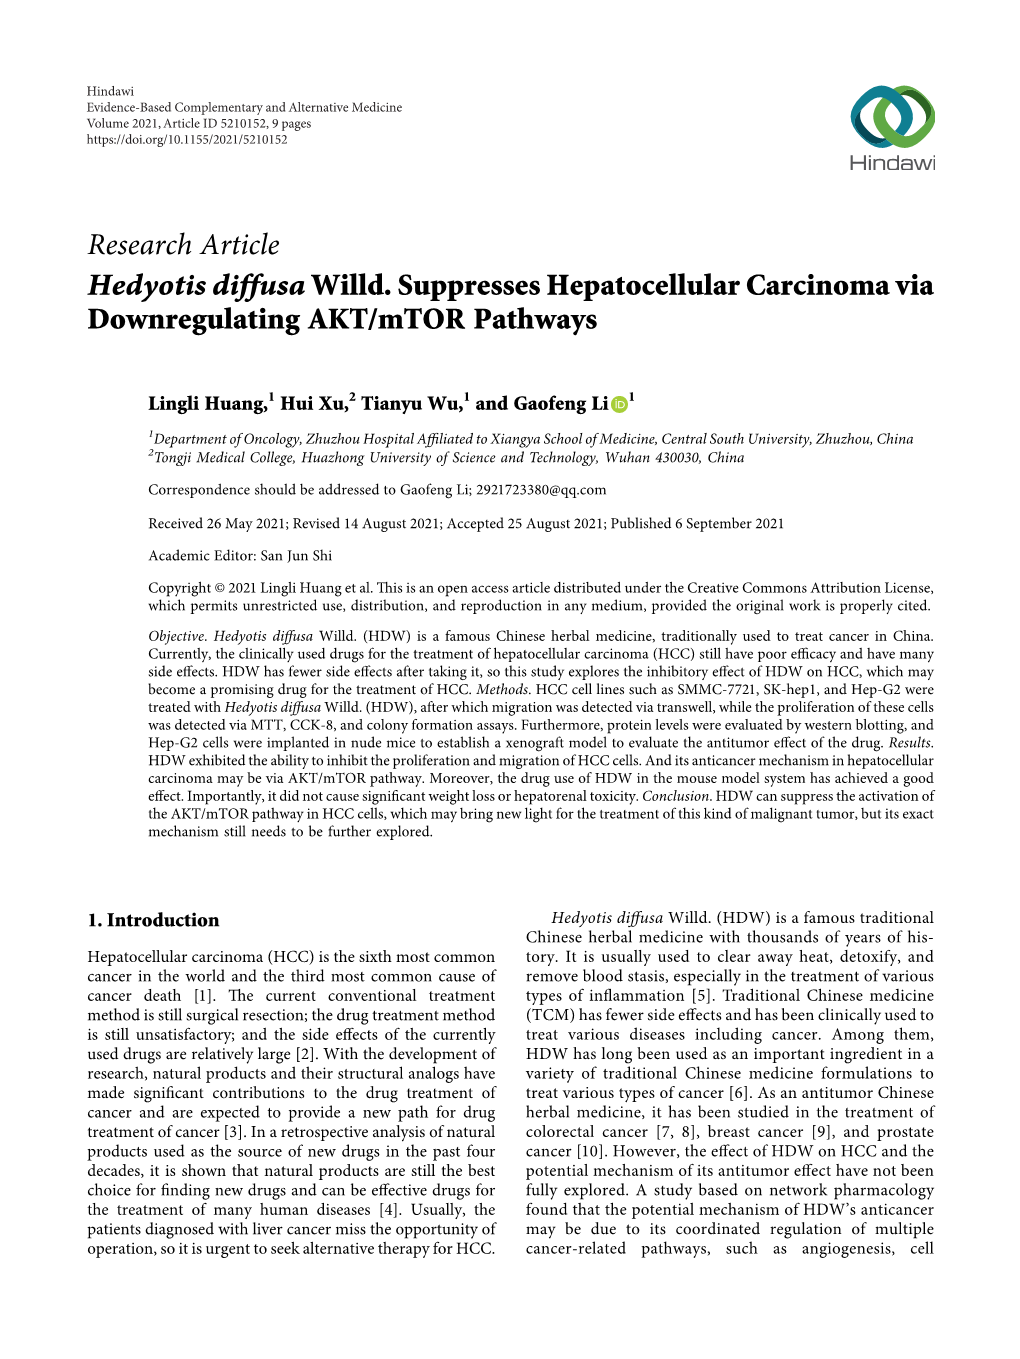 Research Article Hedyotis Diffusa Willd. Suppresses Hepatocellular Carcinoma Via Downregulating AKT/Mtor Pathways